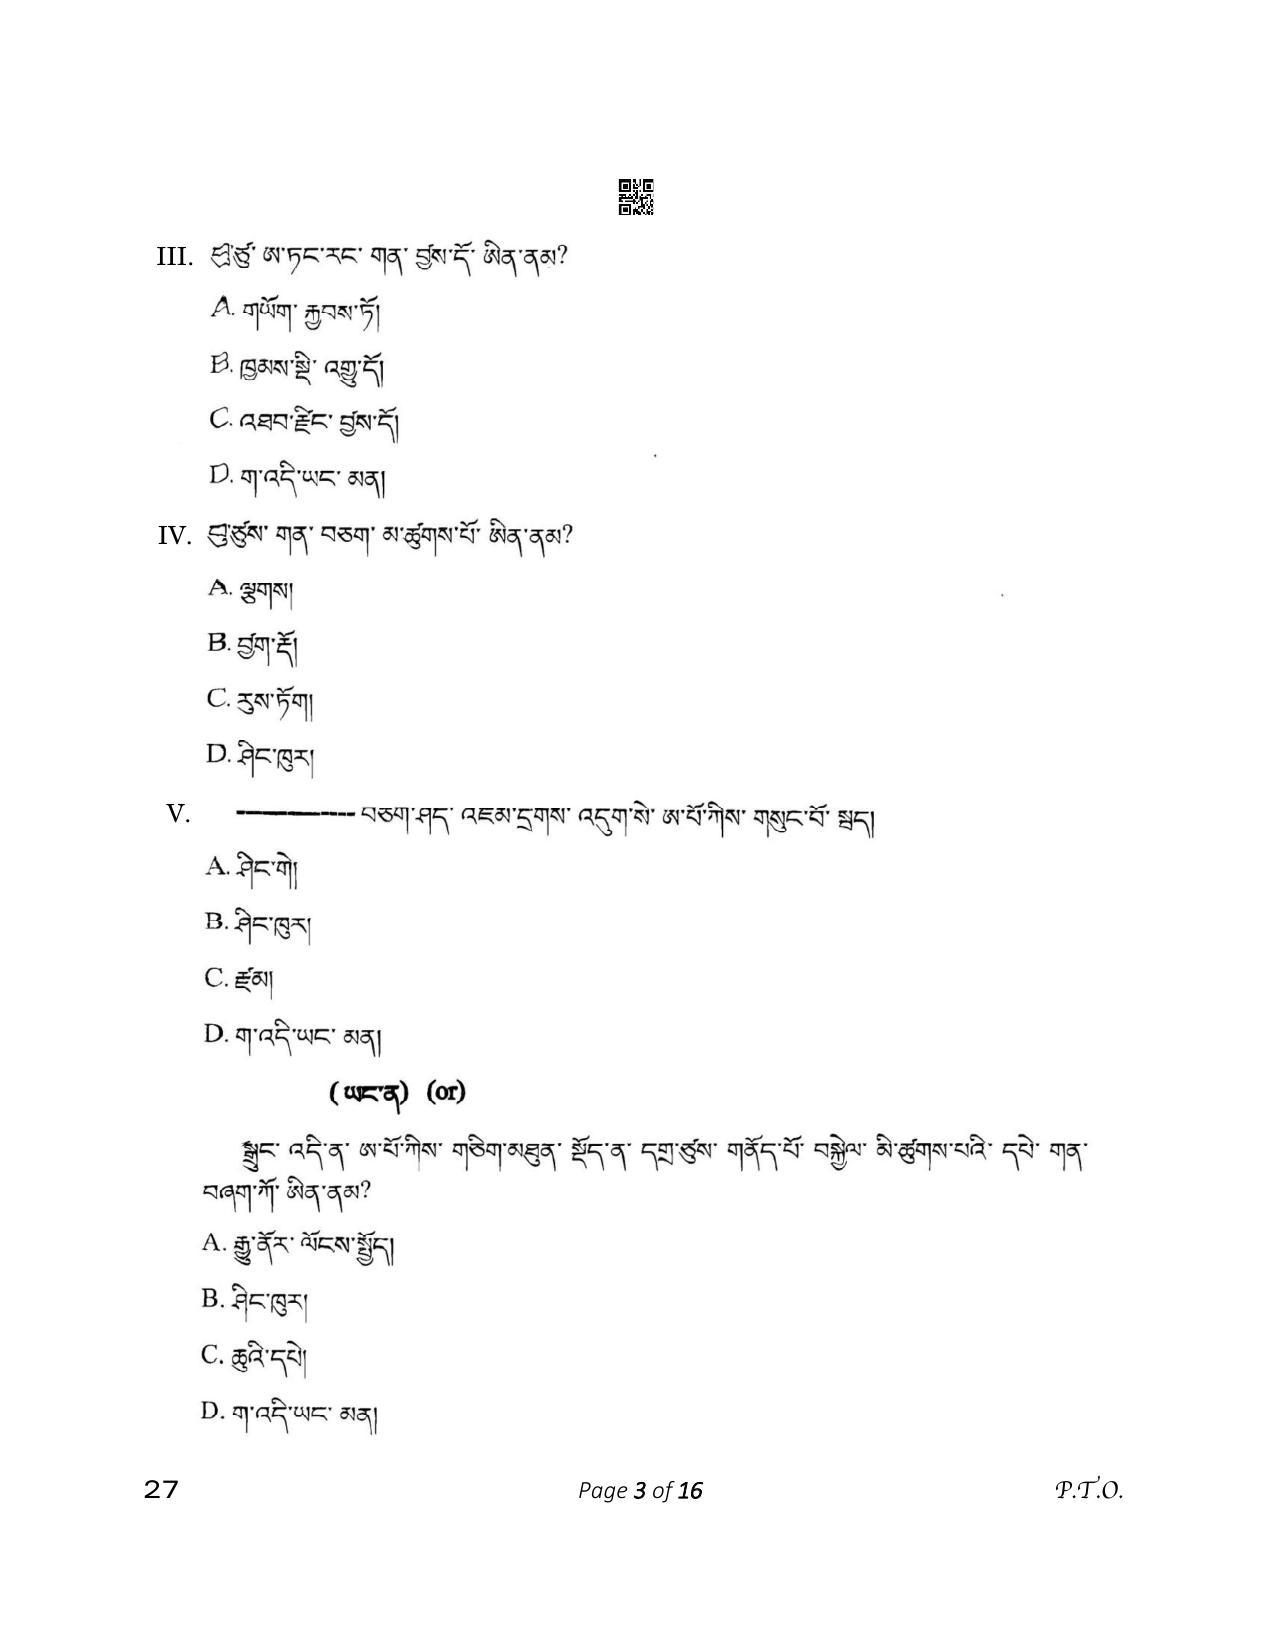 CBSE Class 12 27_Bhutia 2023 2023 Question Paper - Page 3